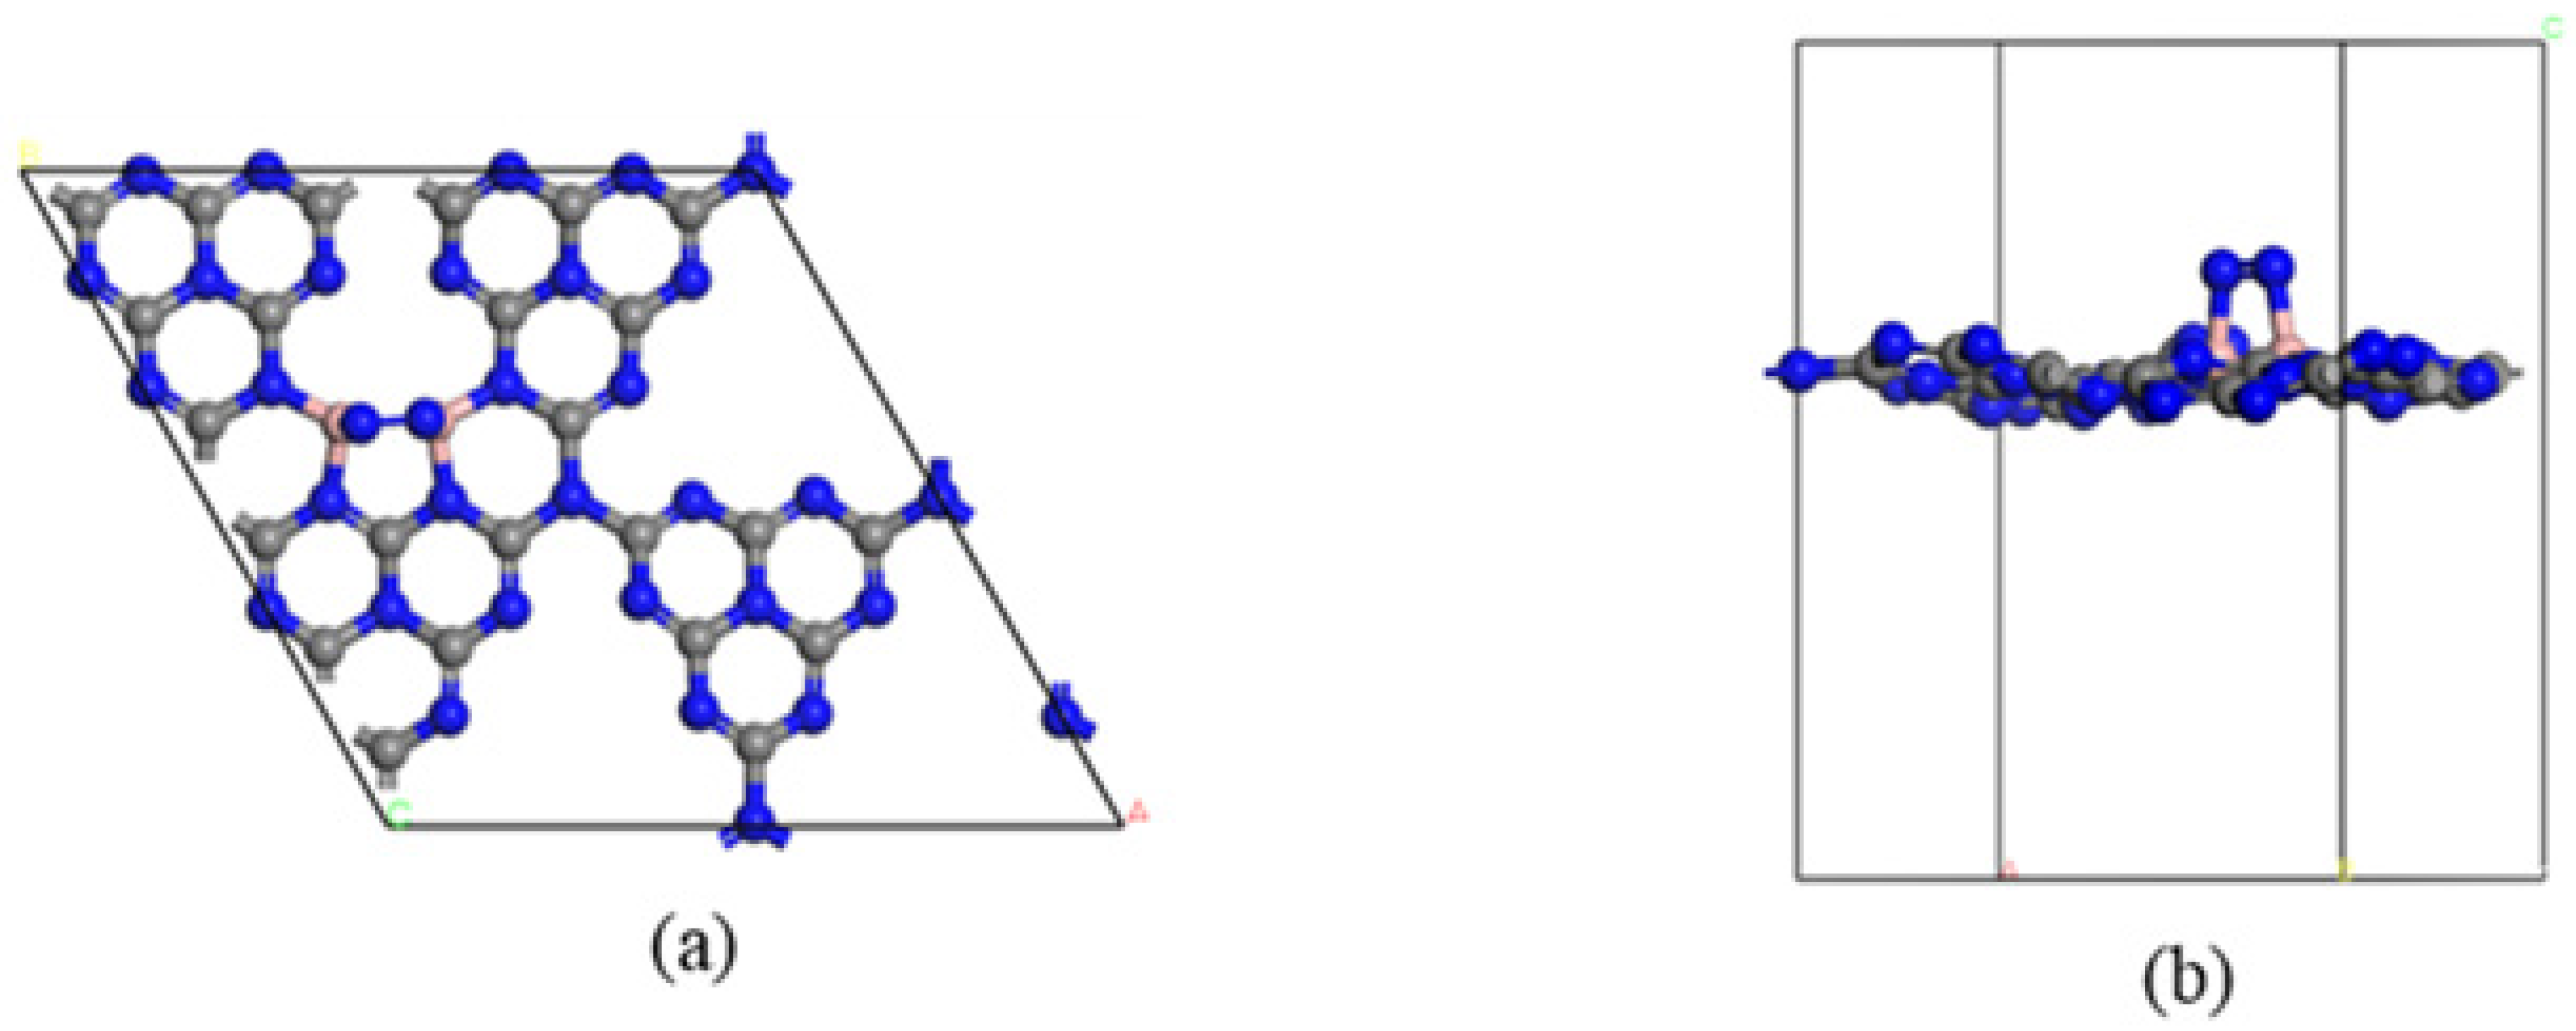 PDF) Predicted boron-carbide compounds: A first-principles study